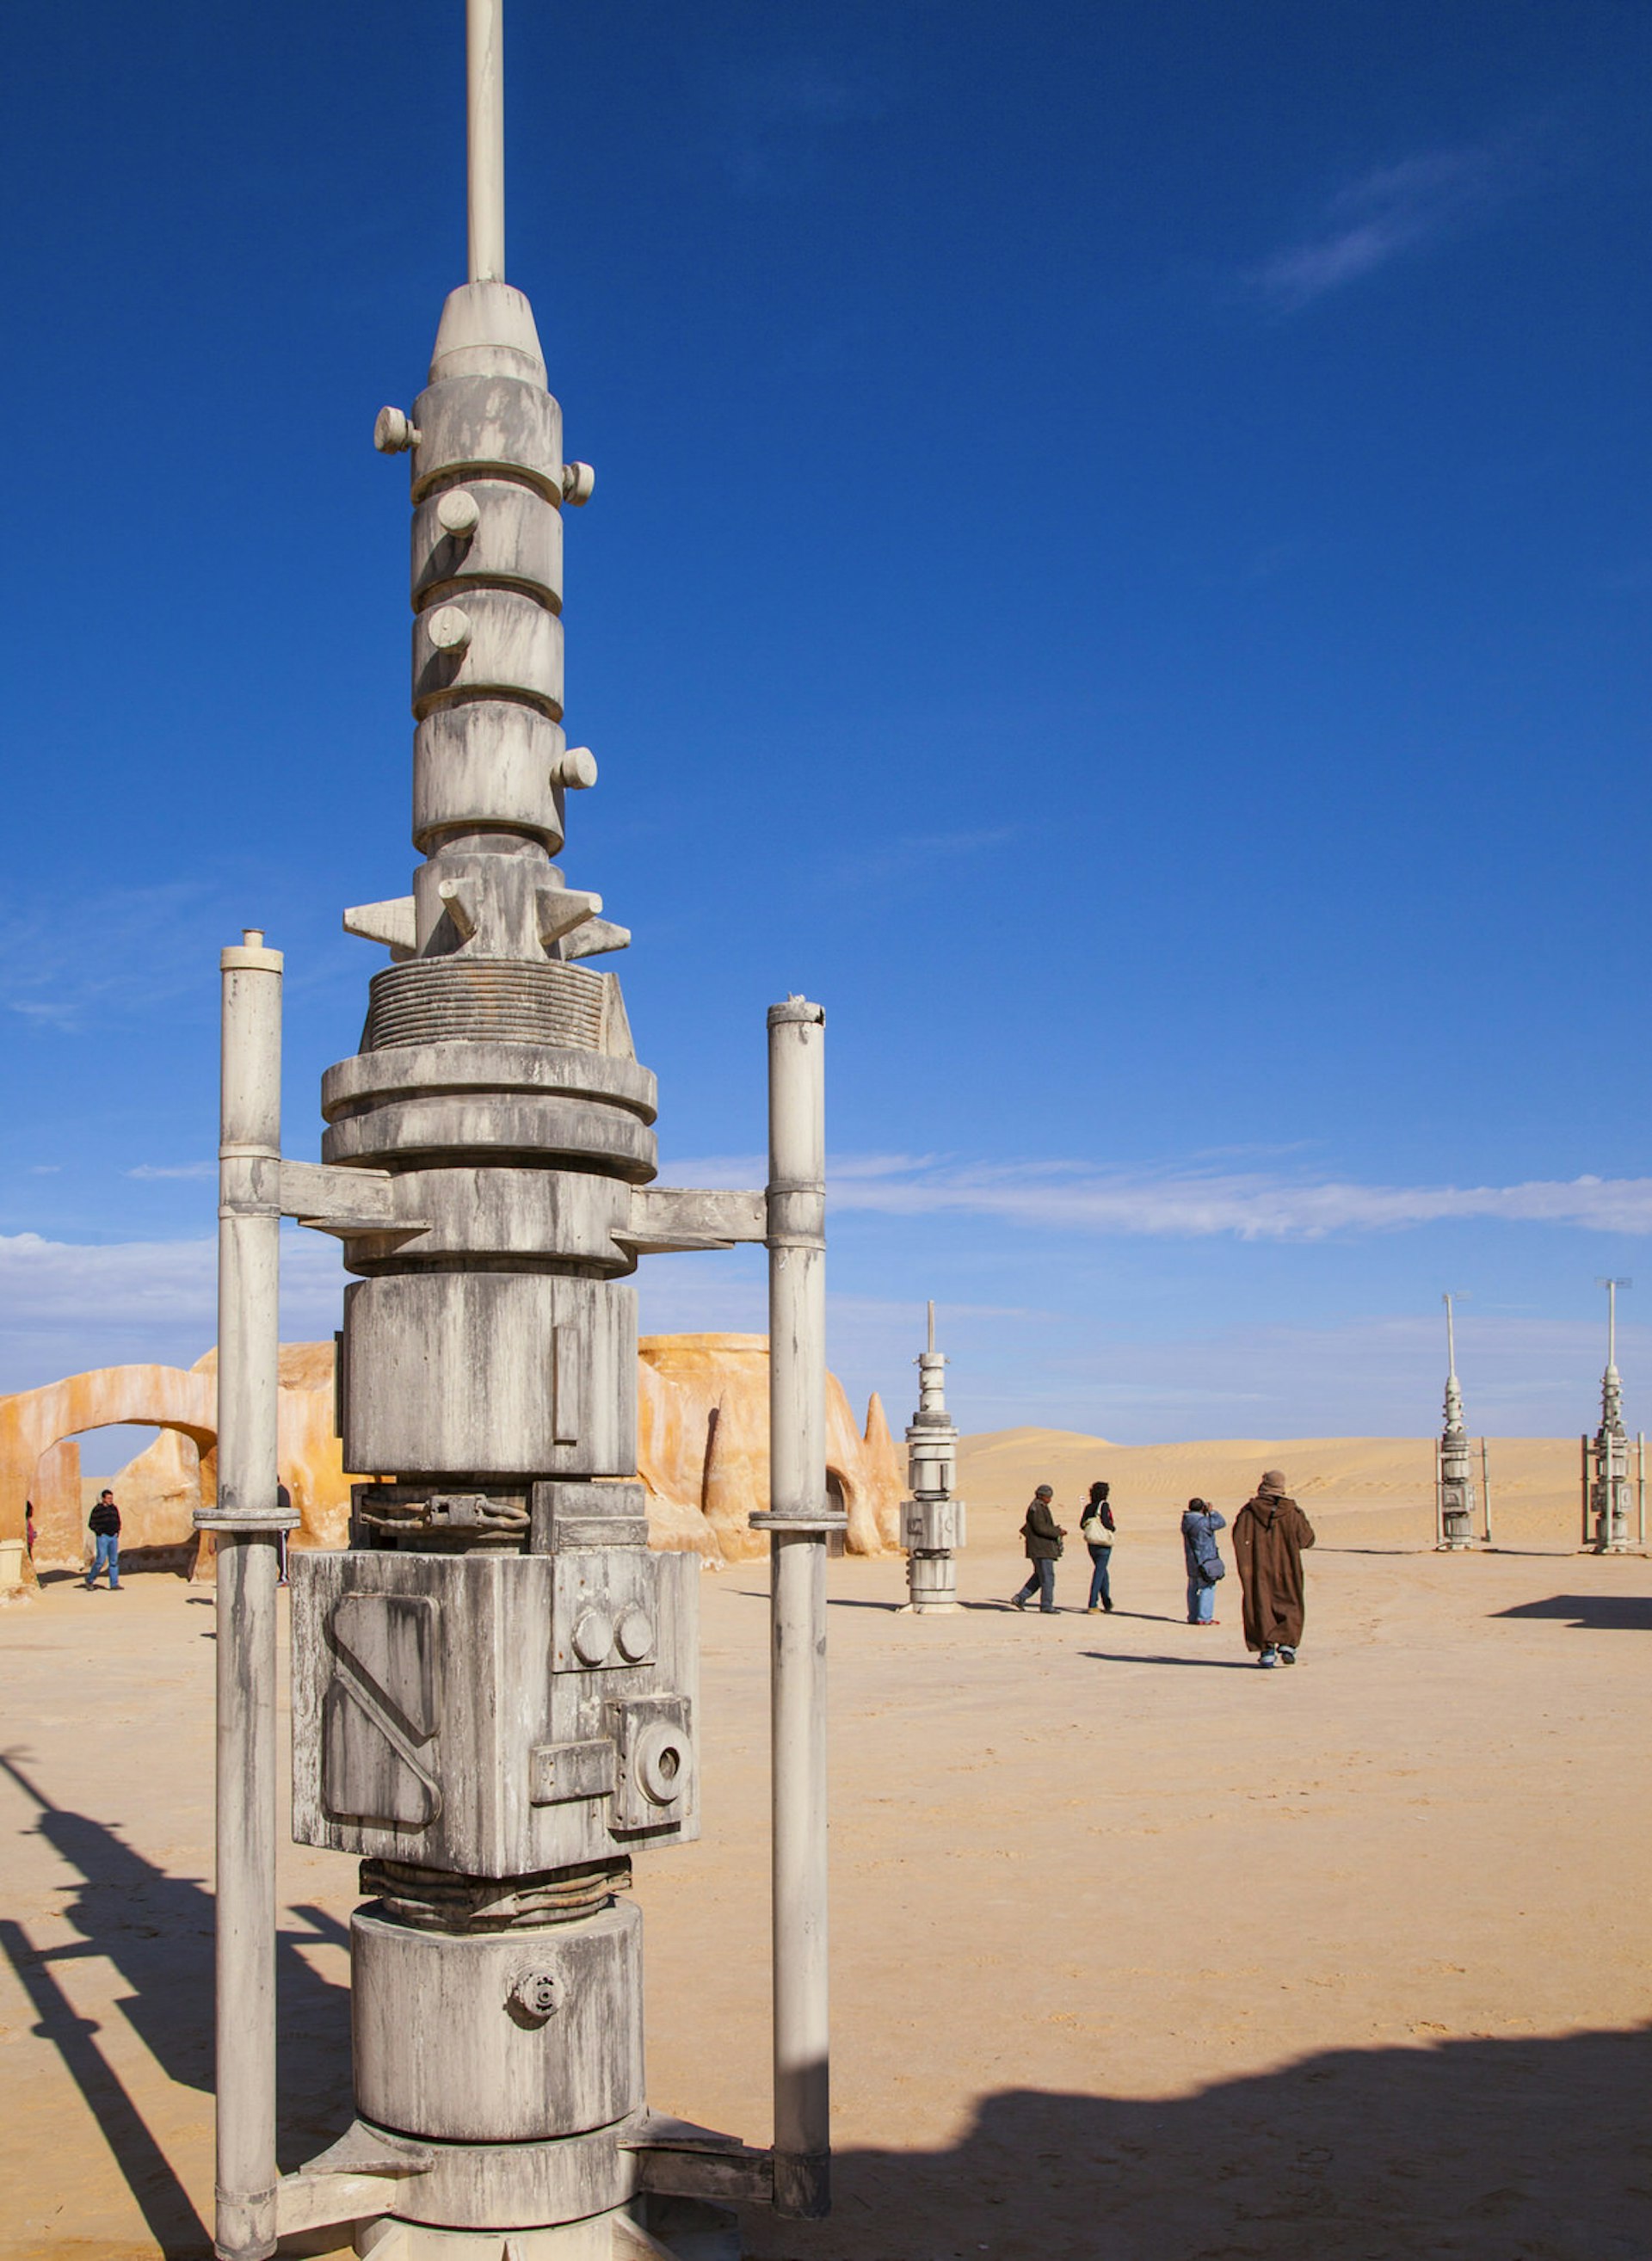 Star Wars set of Mos Espa, southern Tunisia